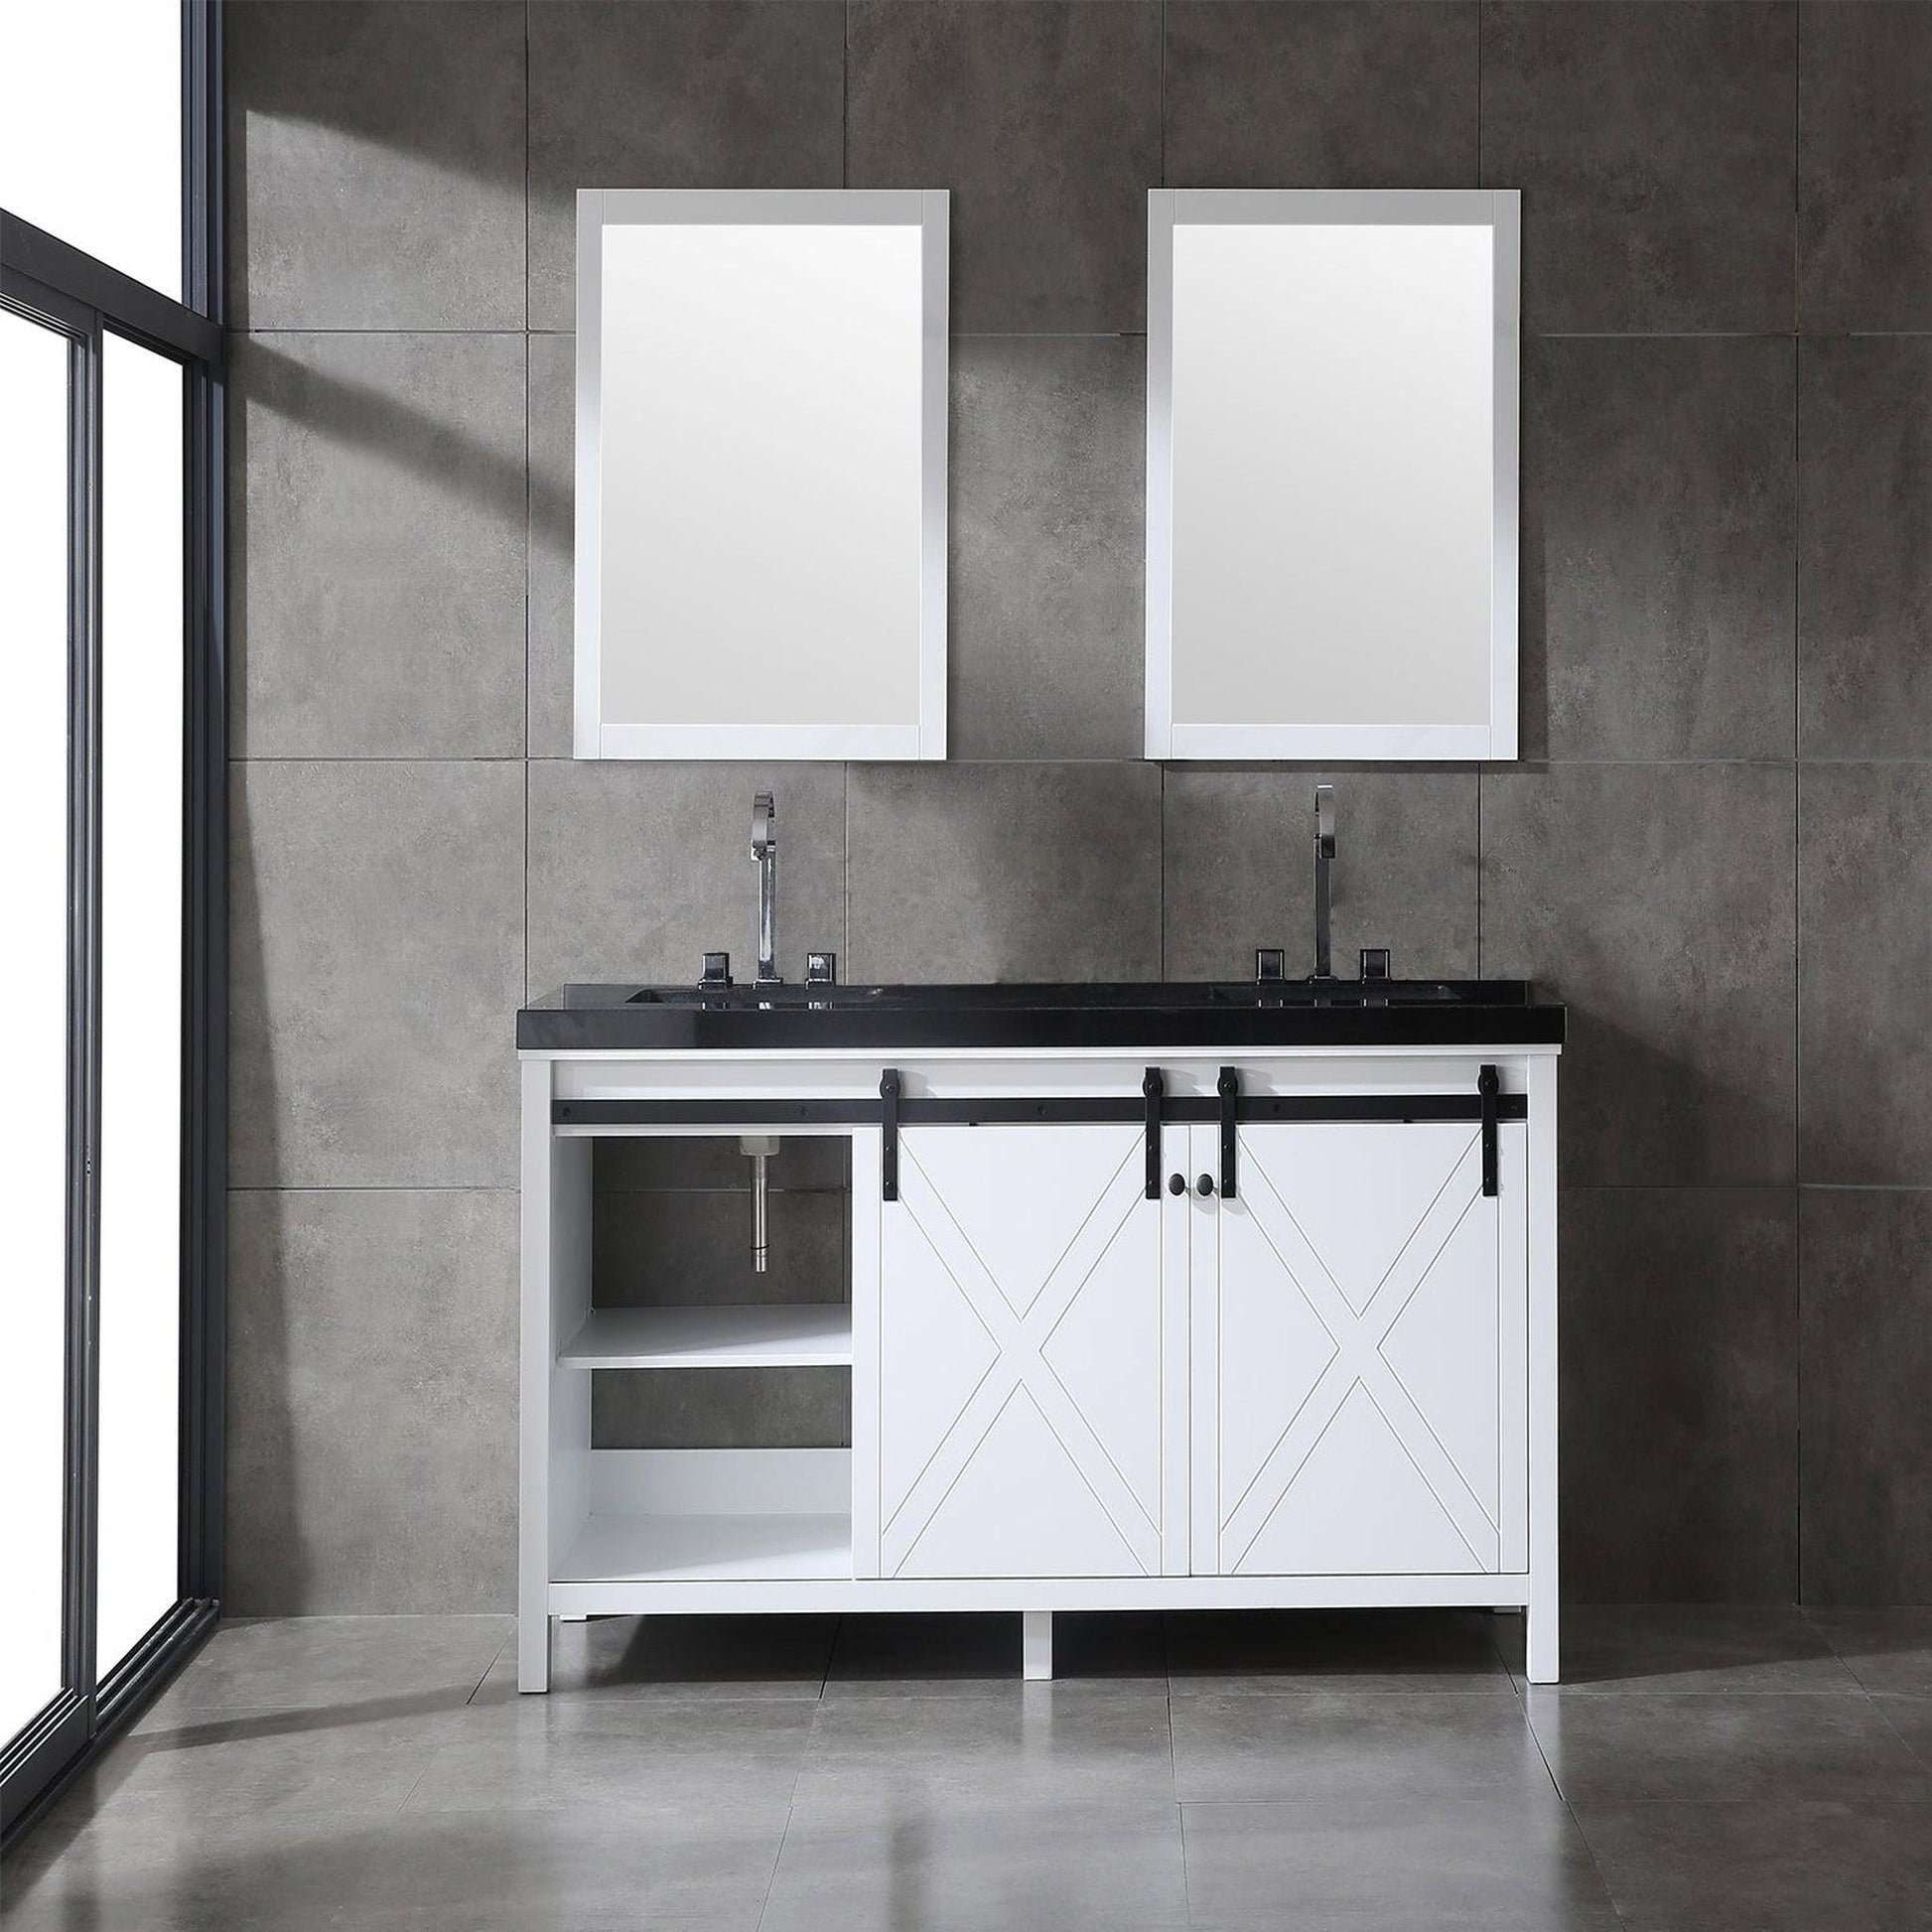 Eviva Dallas 60” x 34” White Freestanding Bathroom Vanity With Black Granite Countertop and Double Undermount Sink